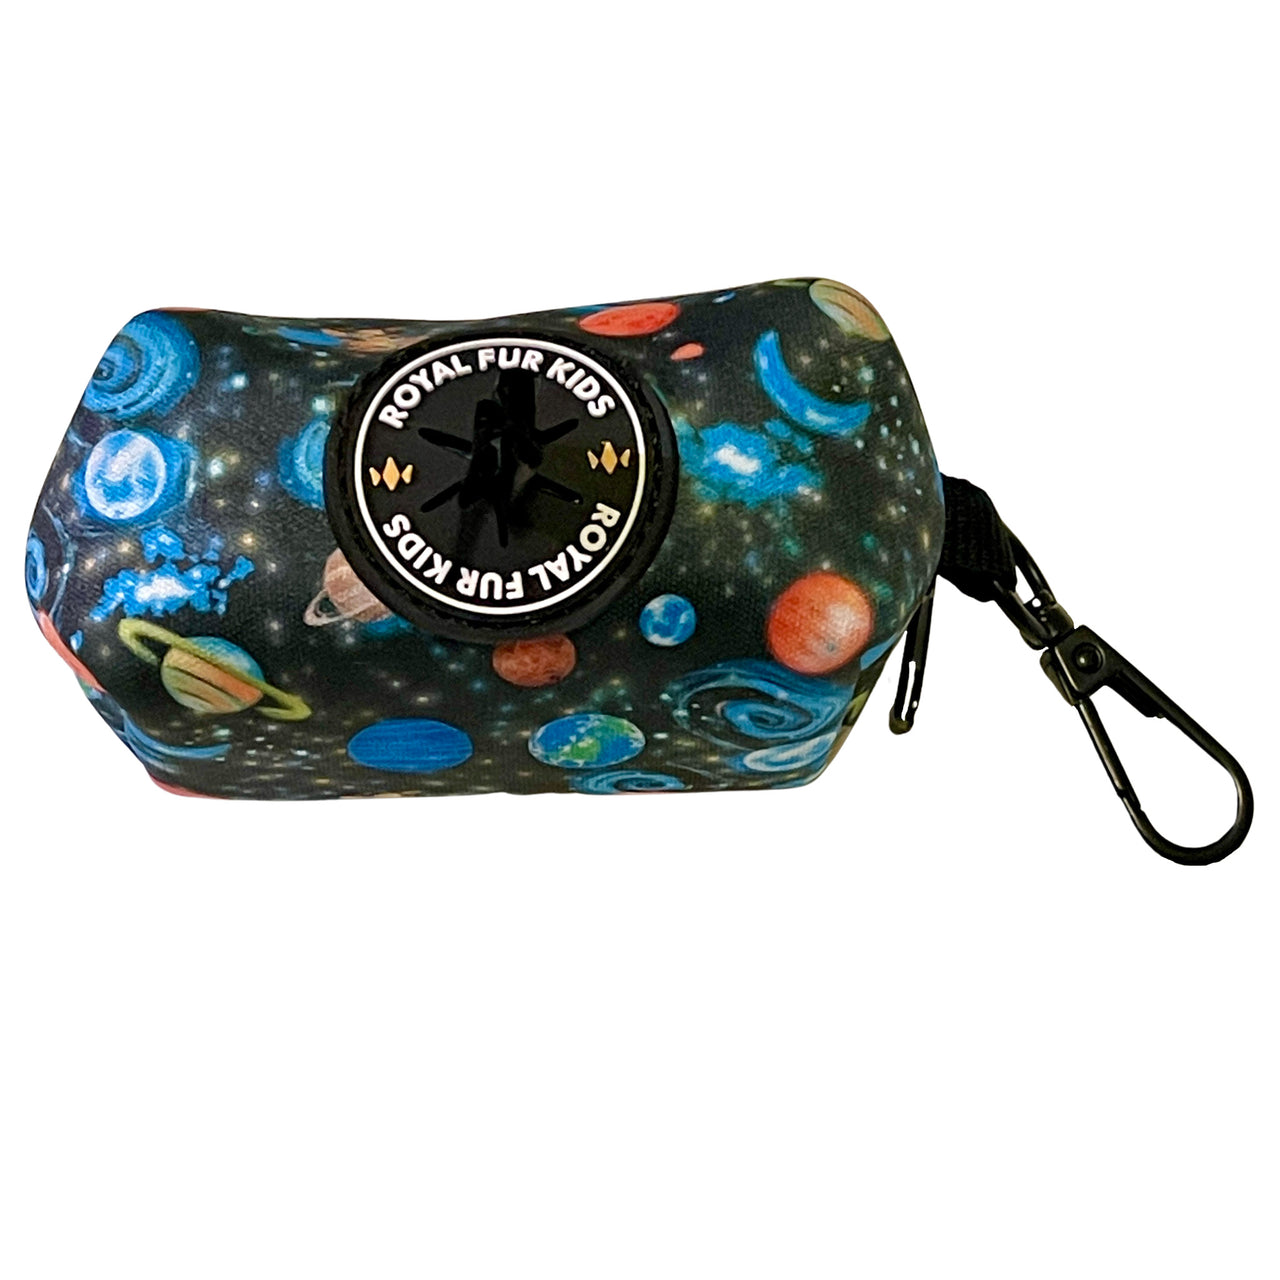 Intergalactic Space Odyssey Poop Bag Holder